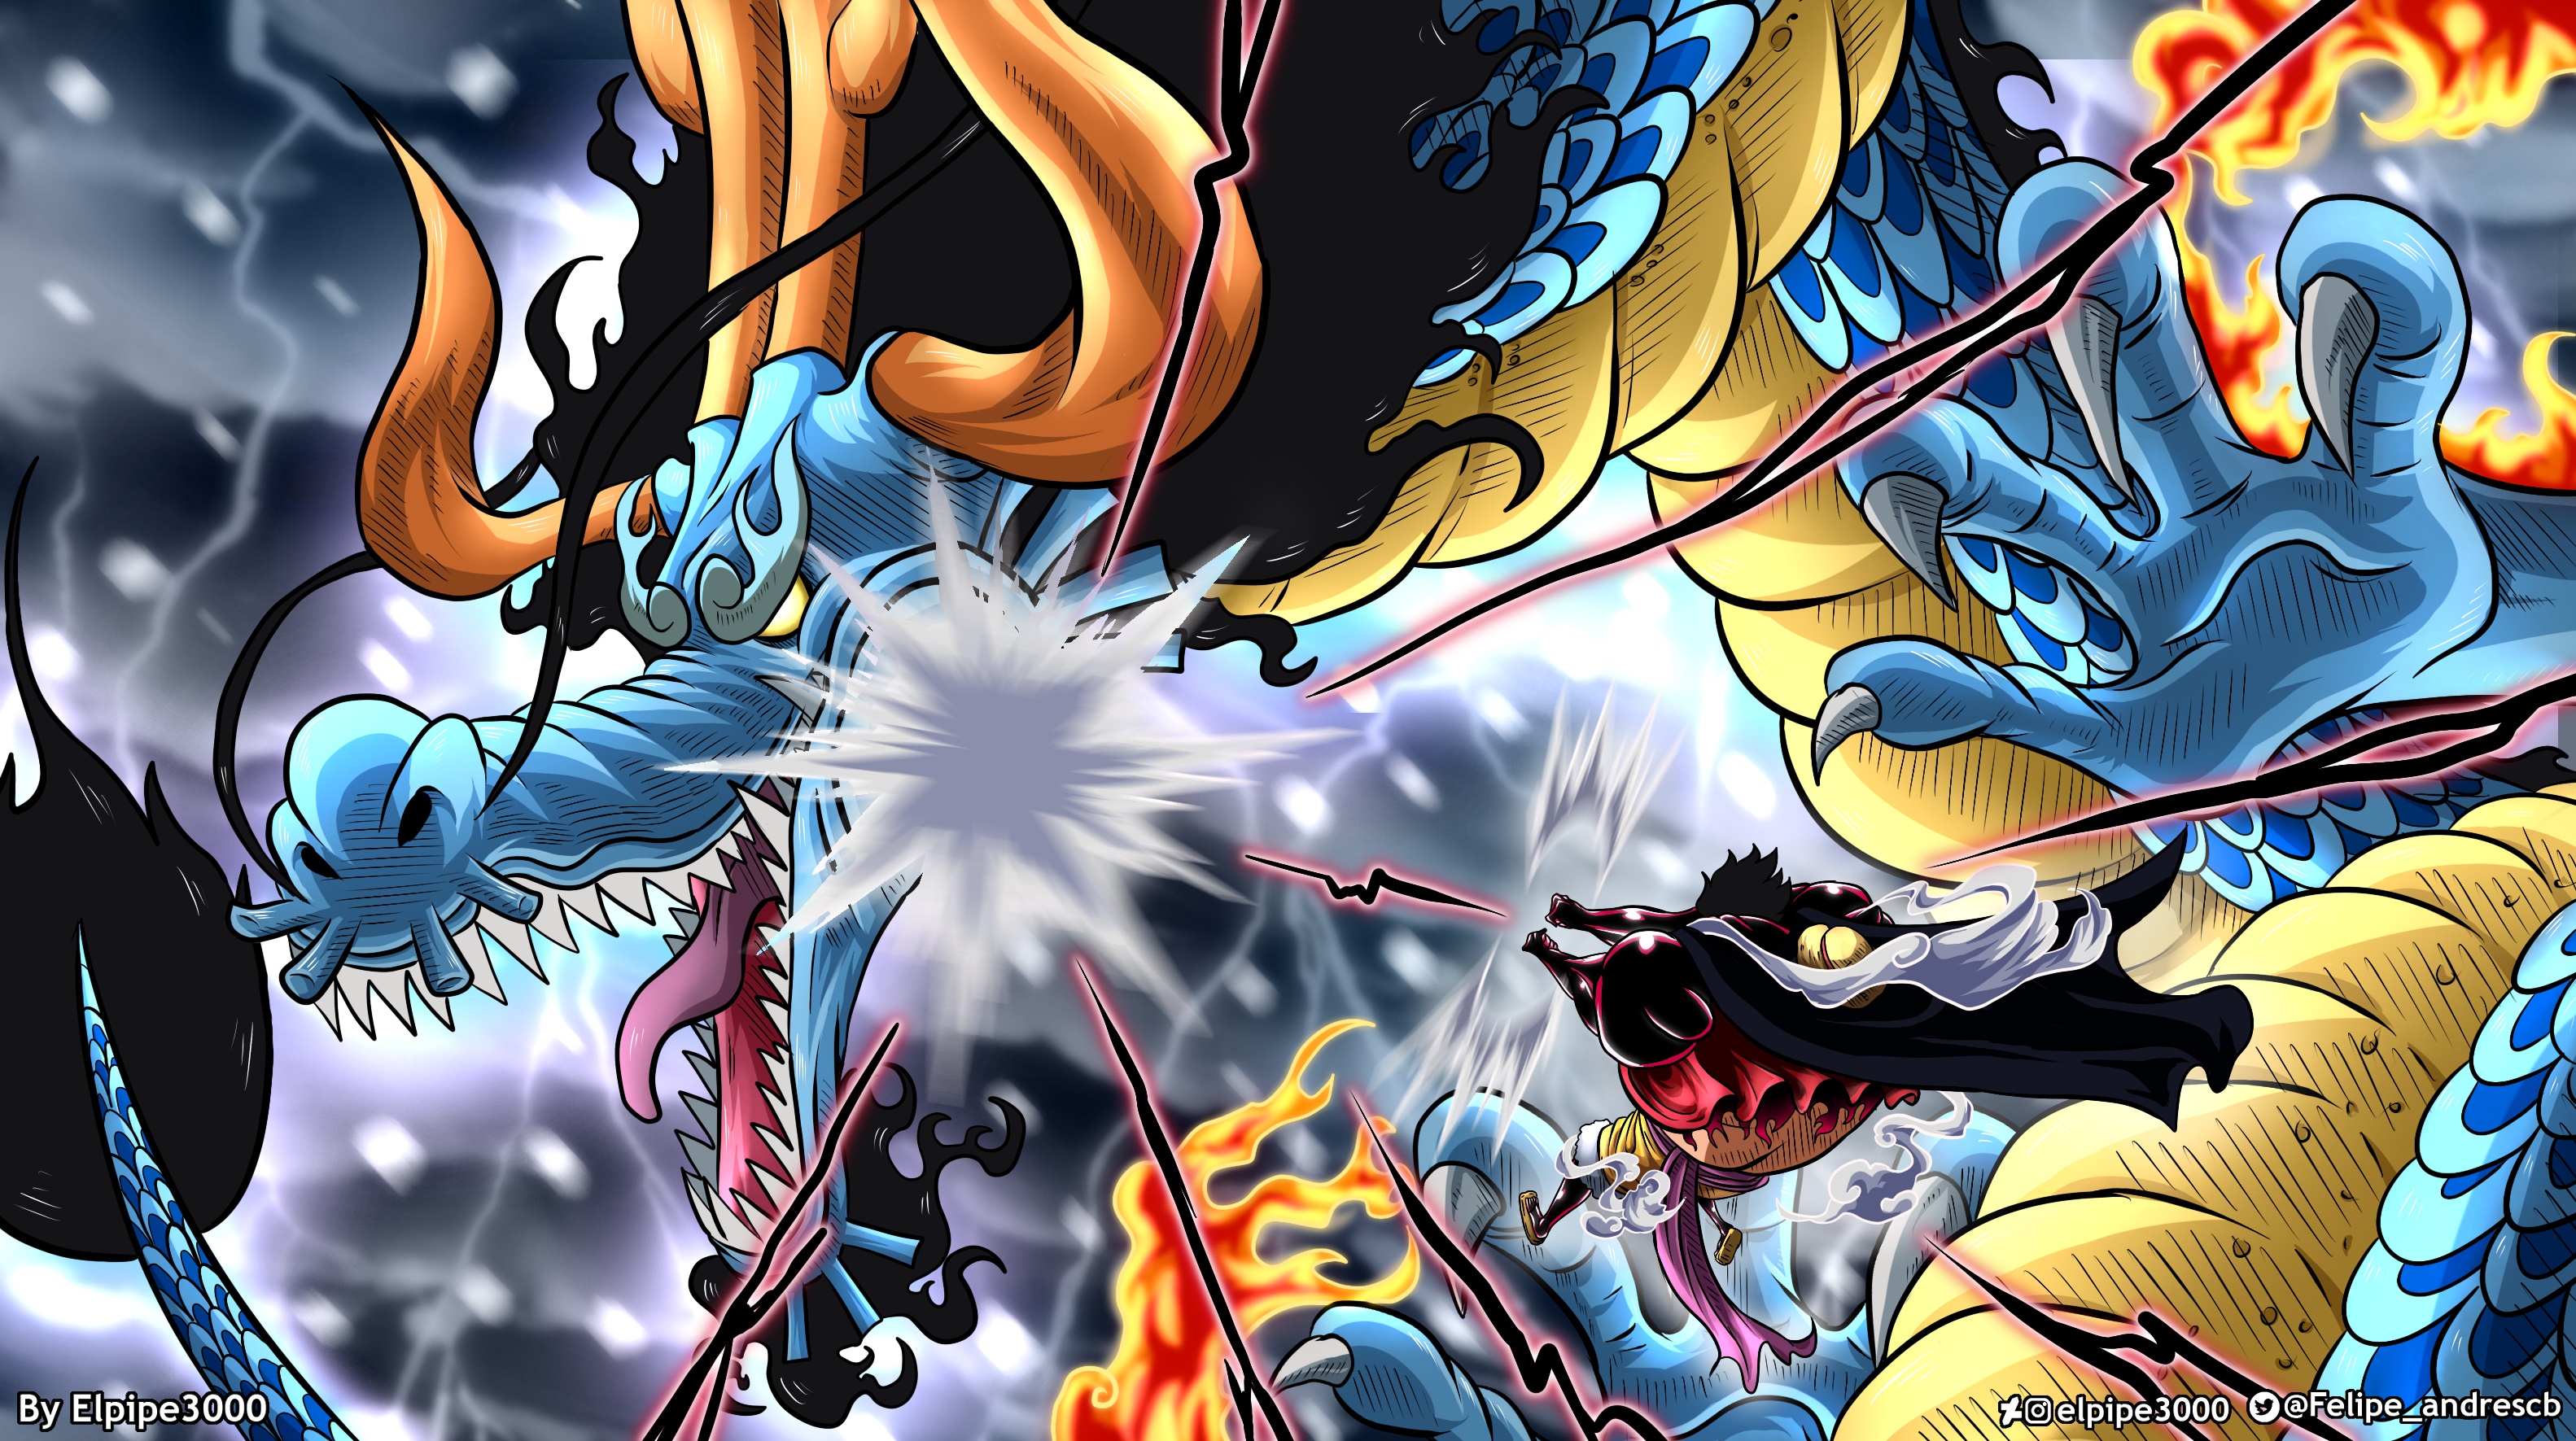 One Piece' Chapter 1,000 Recap: Luffy vs Kaido Finally Begins